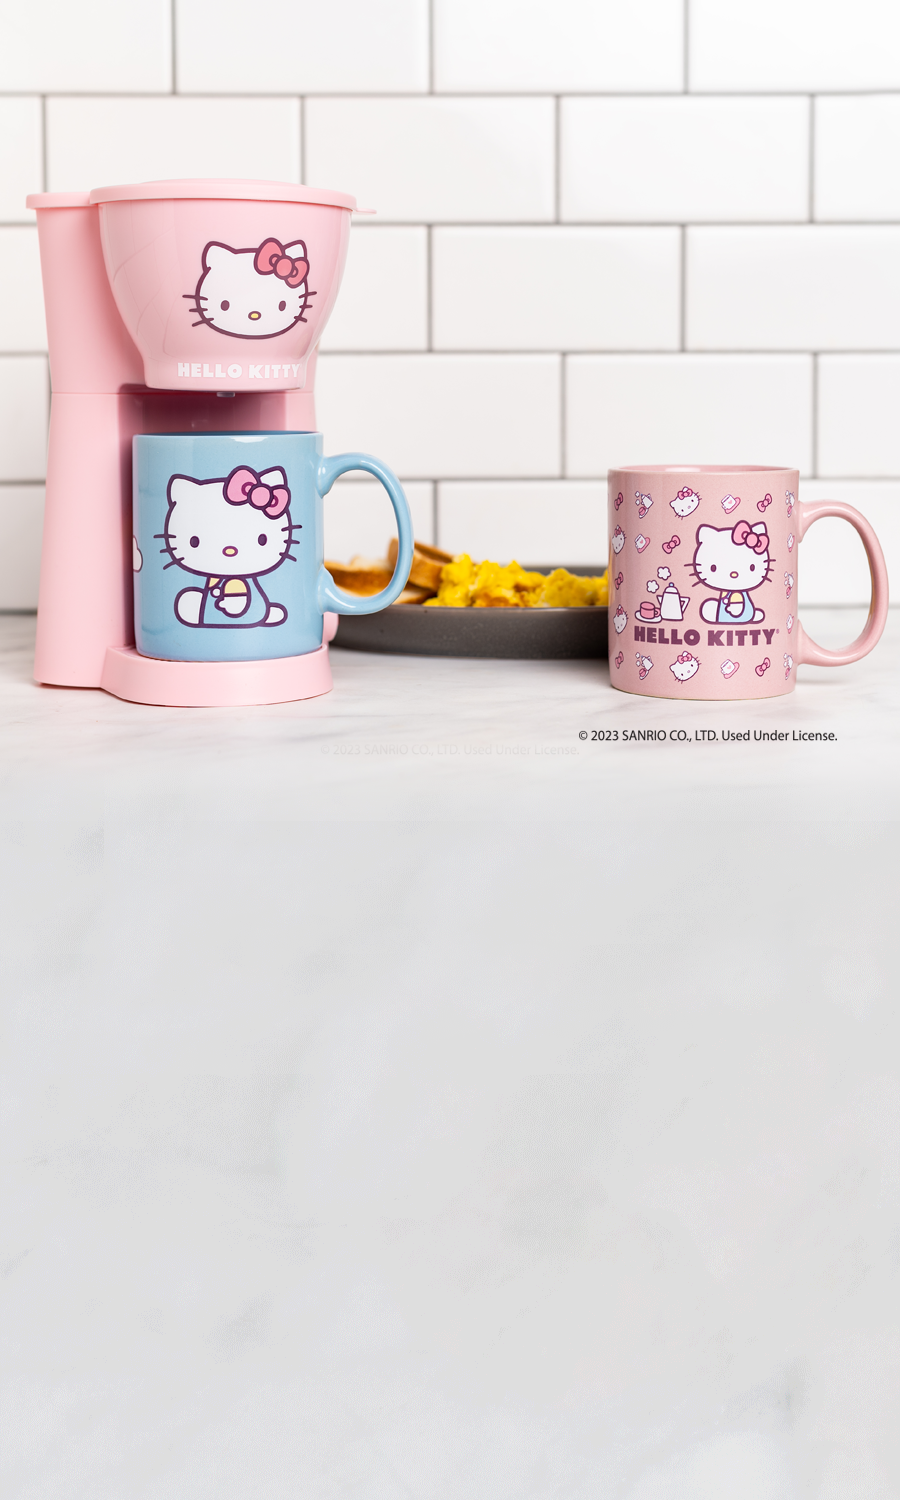 Uncanny Brands Kuromi Coffee Mug with Electric Mug Warmer